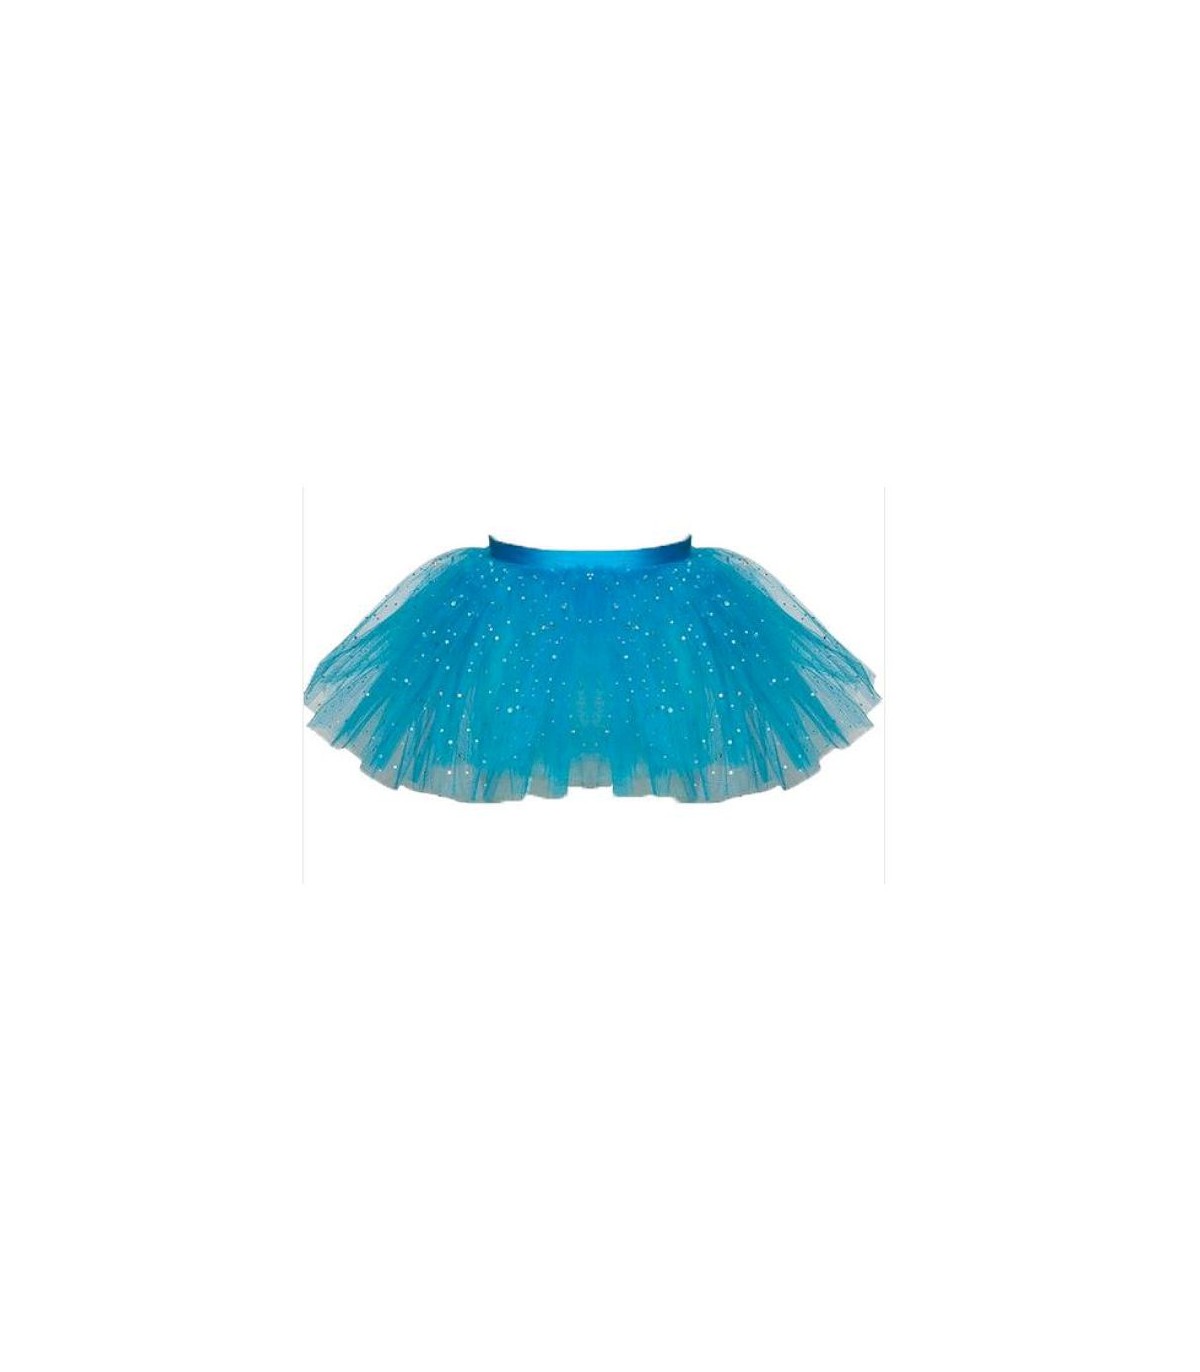 Turquoise Blue Sparkly Tutu With Silver Sequins Dance Ballet Costume Tutu Katz